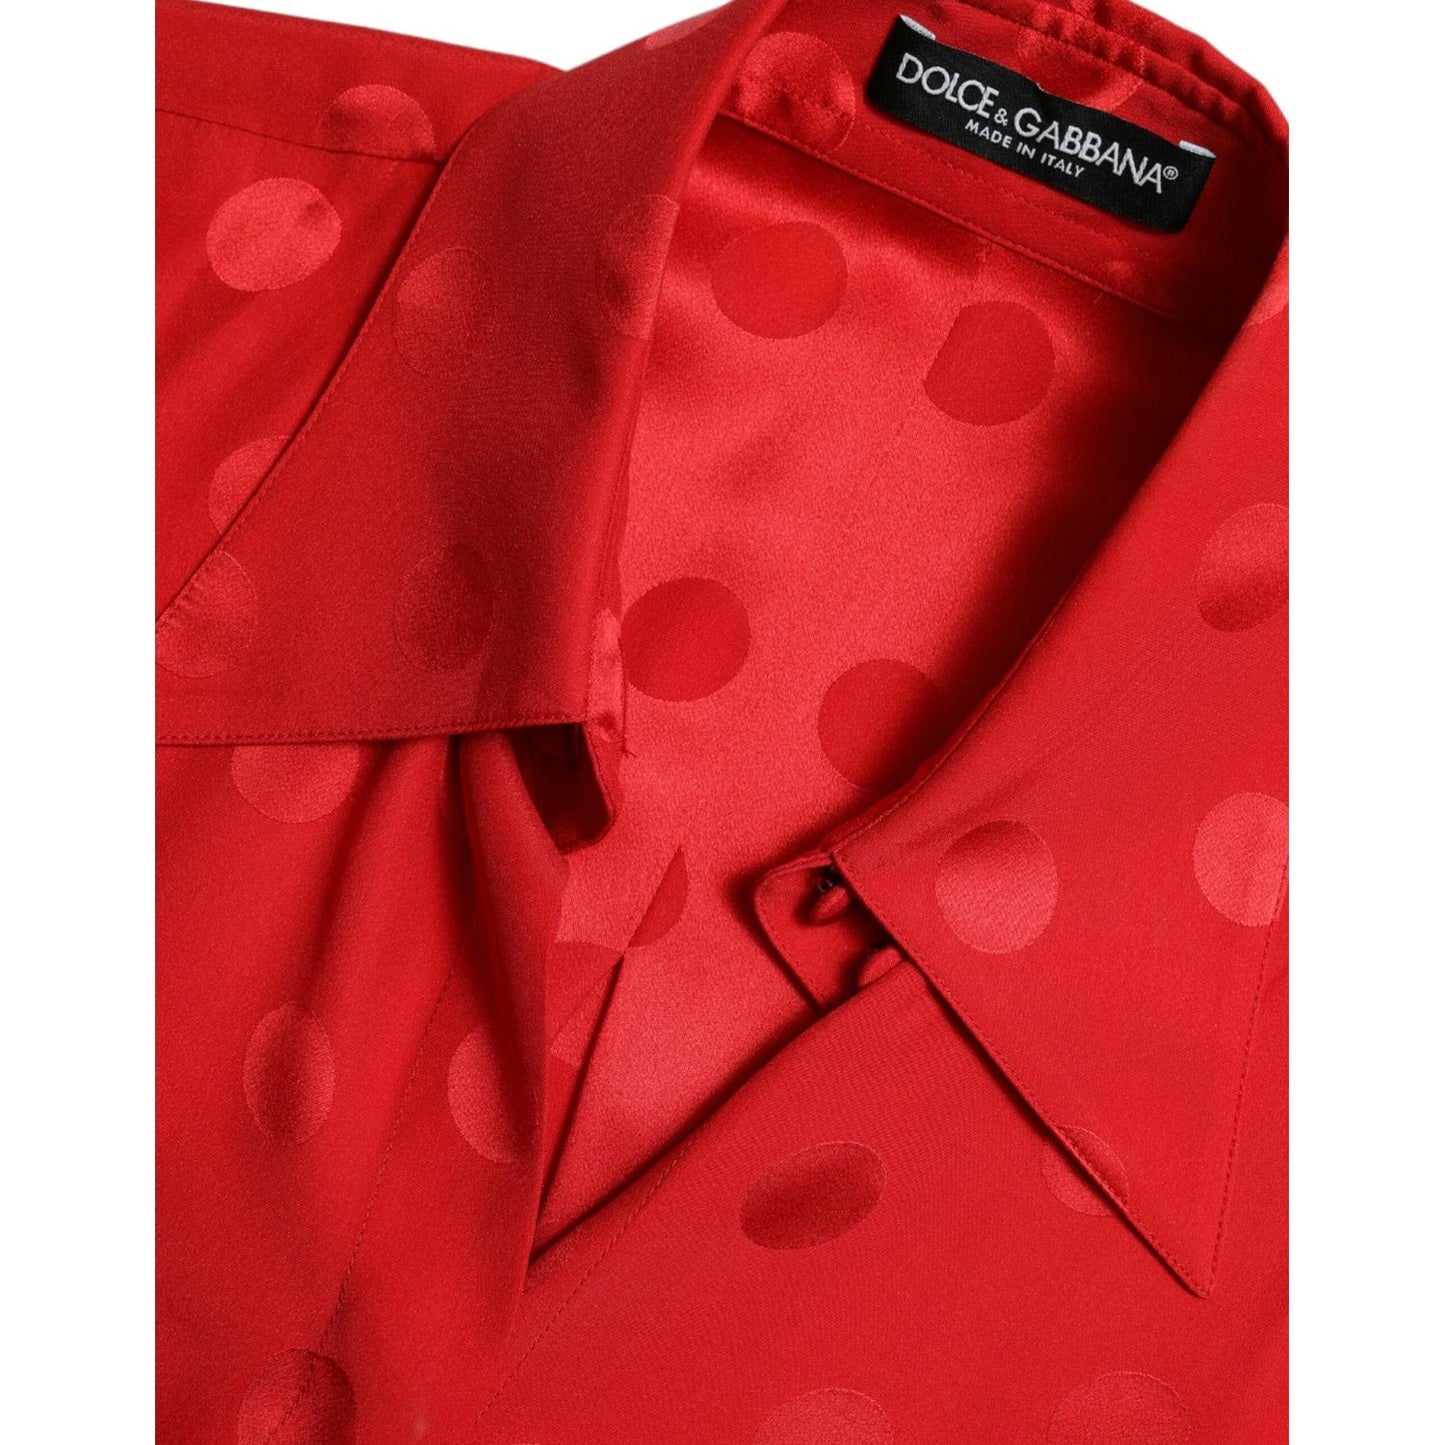 Dolce & Gabbana Elegant Polka Dot Sleeveless Silk Blouse red-polka-dot-sleeveless-collared-blouse-top